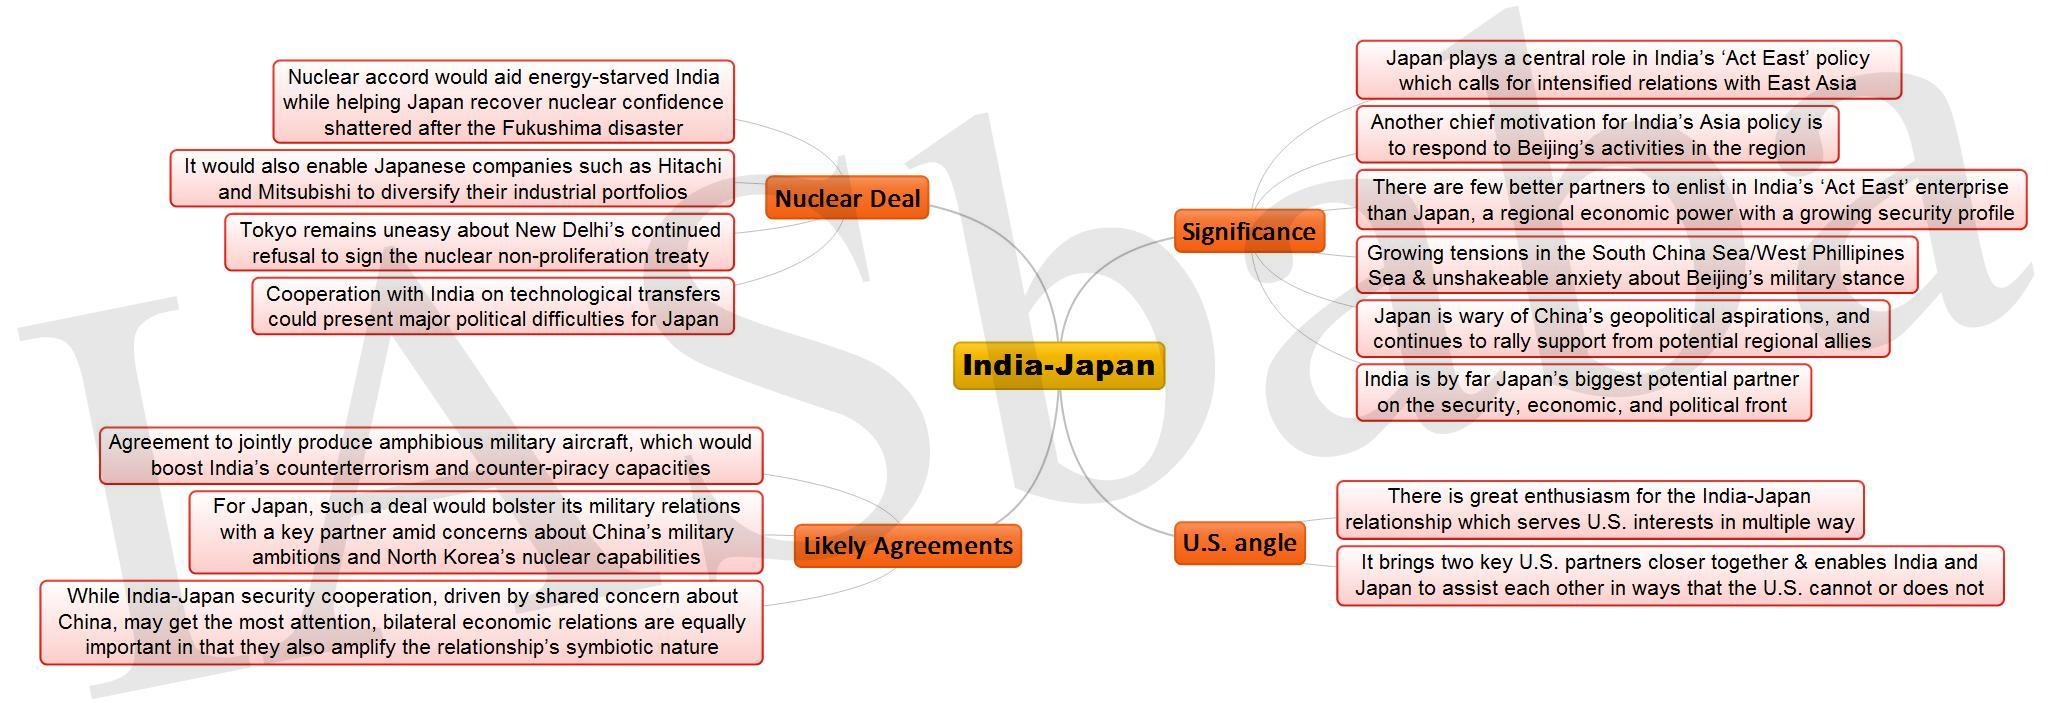 India-Japan JPEG